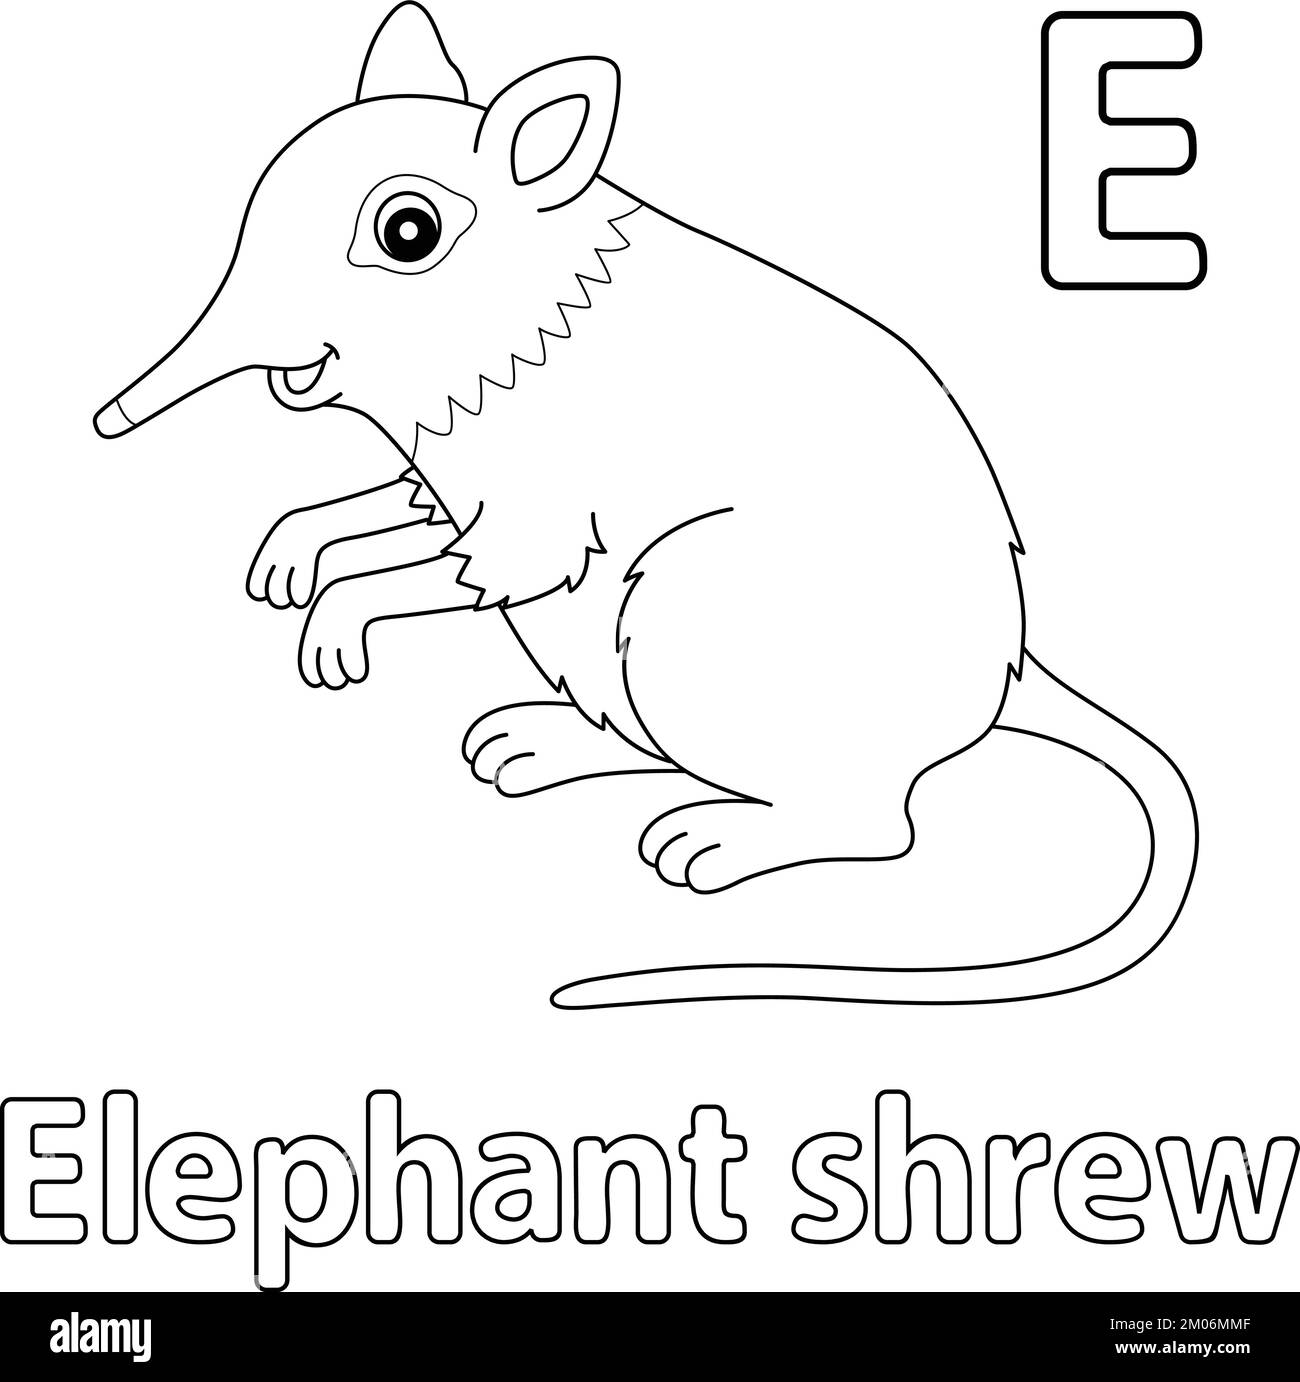 Elephant Shrew Alphabet ABC isolierte Farbe E Stock Vektor